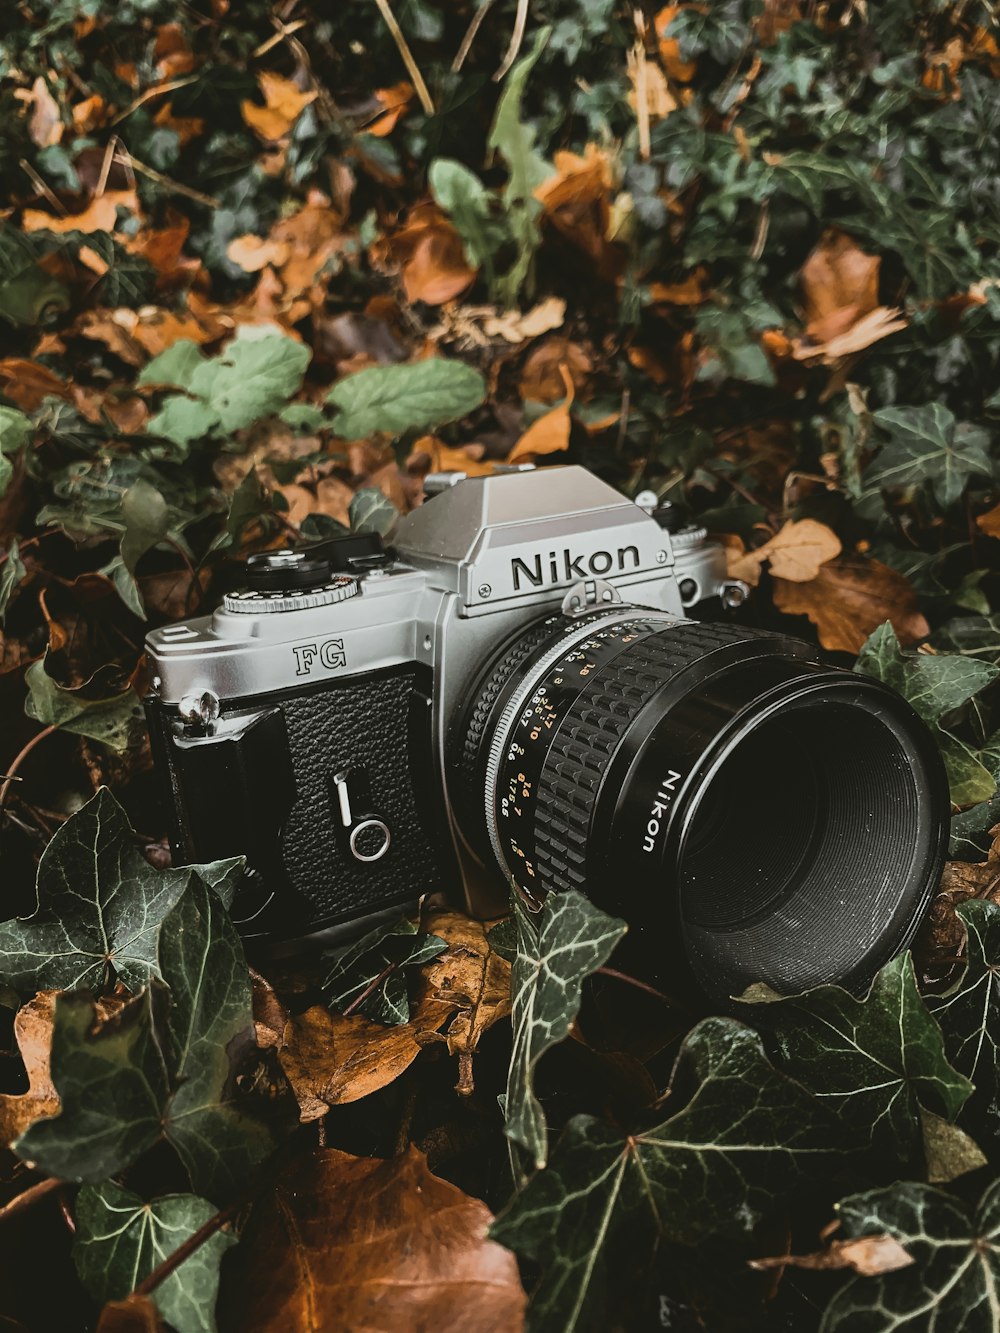 câmera Nikon SLR cinza e preta